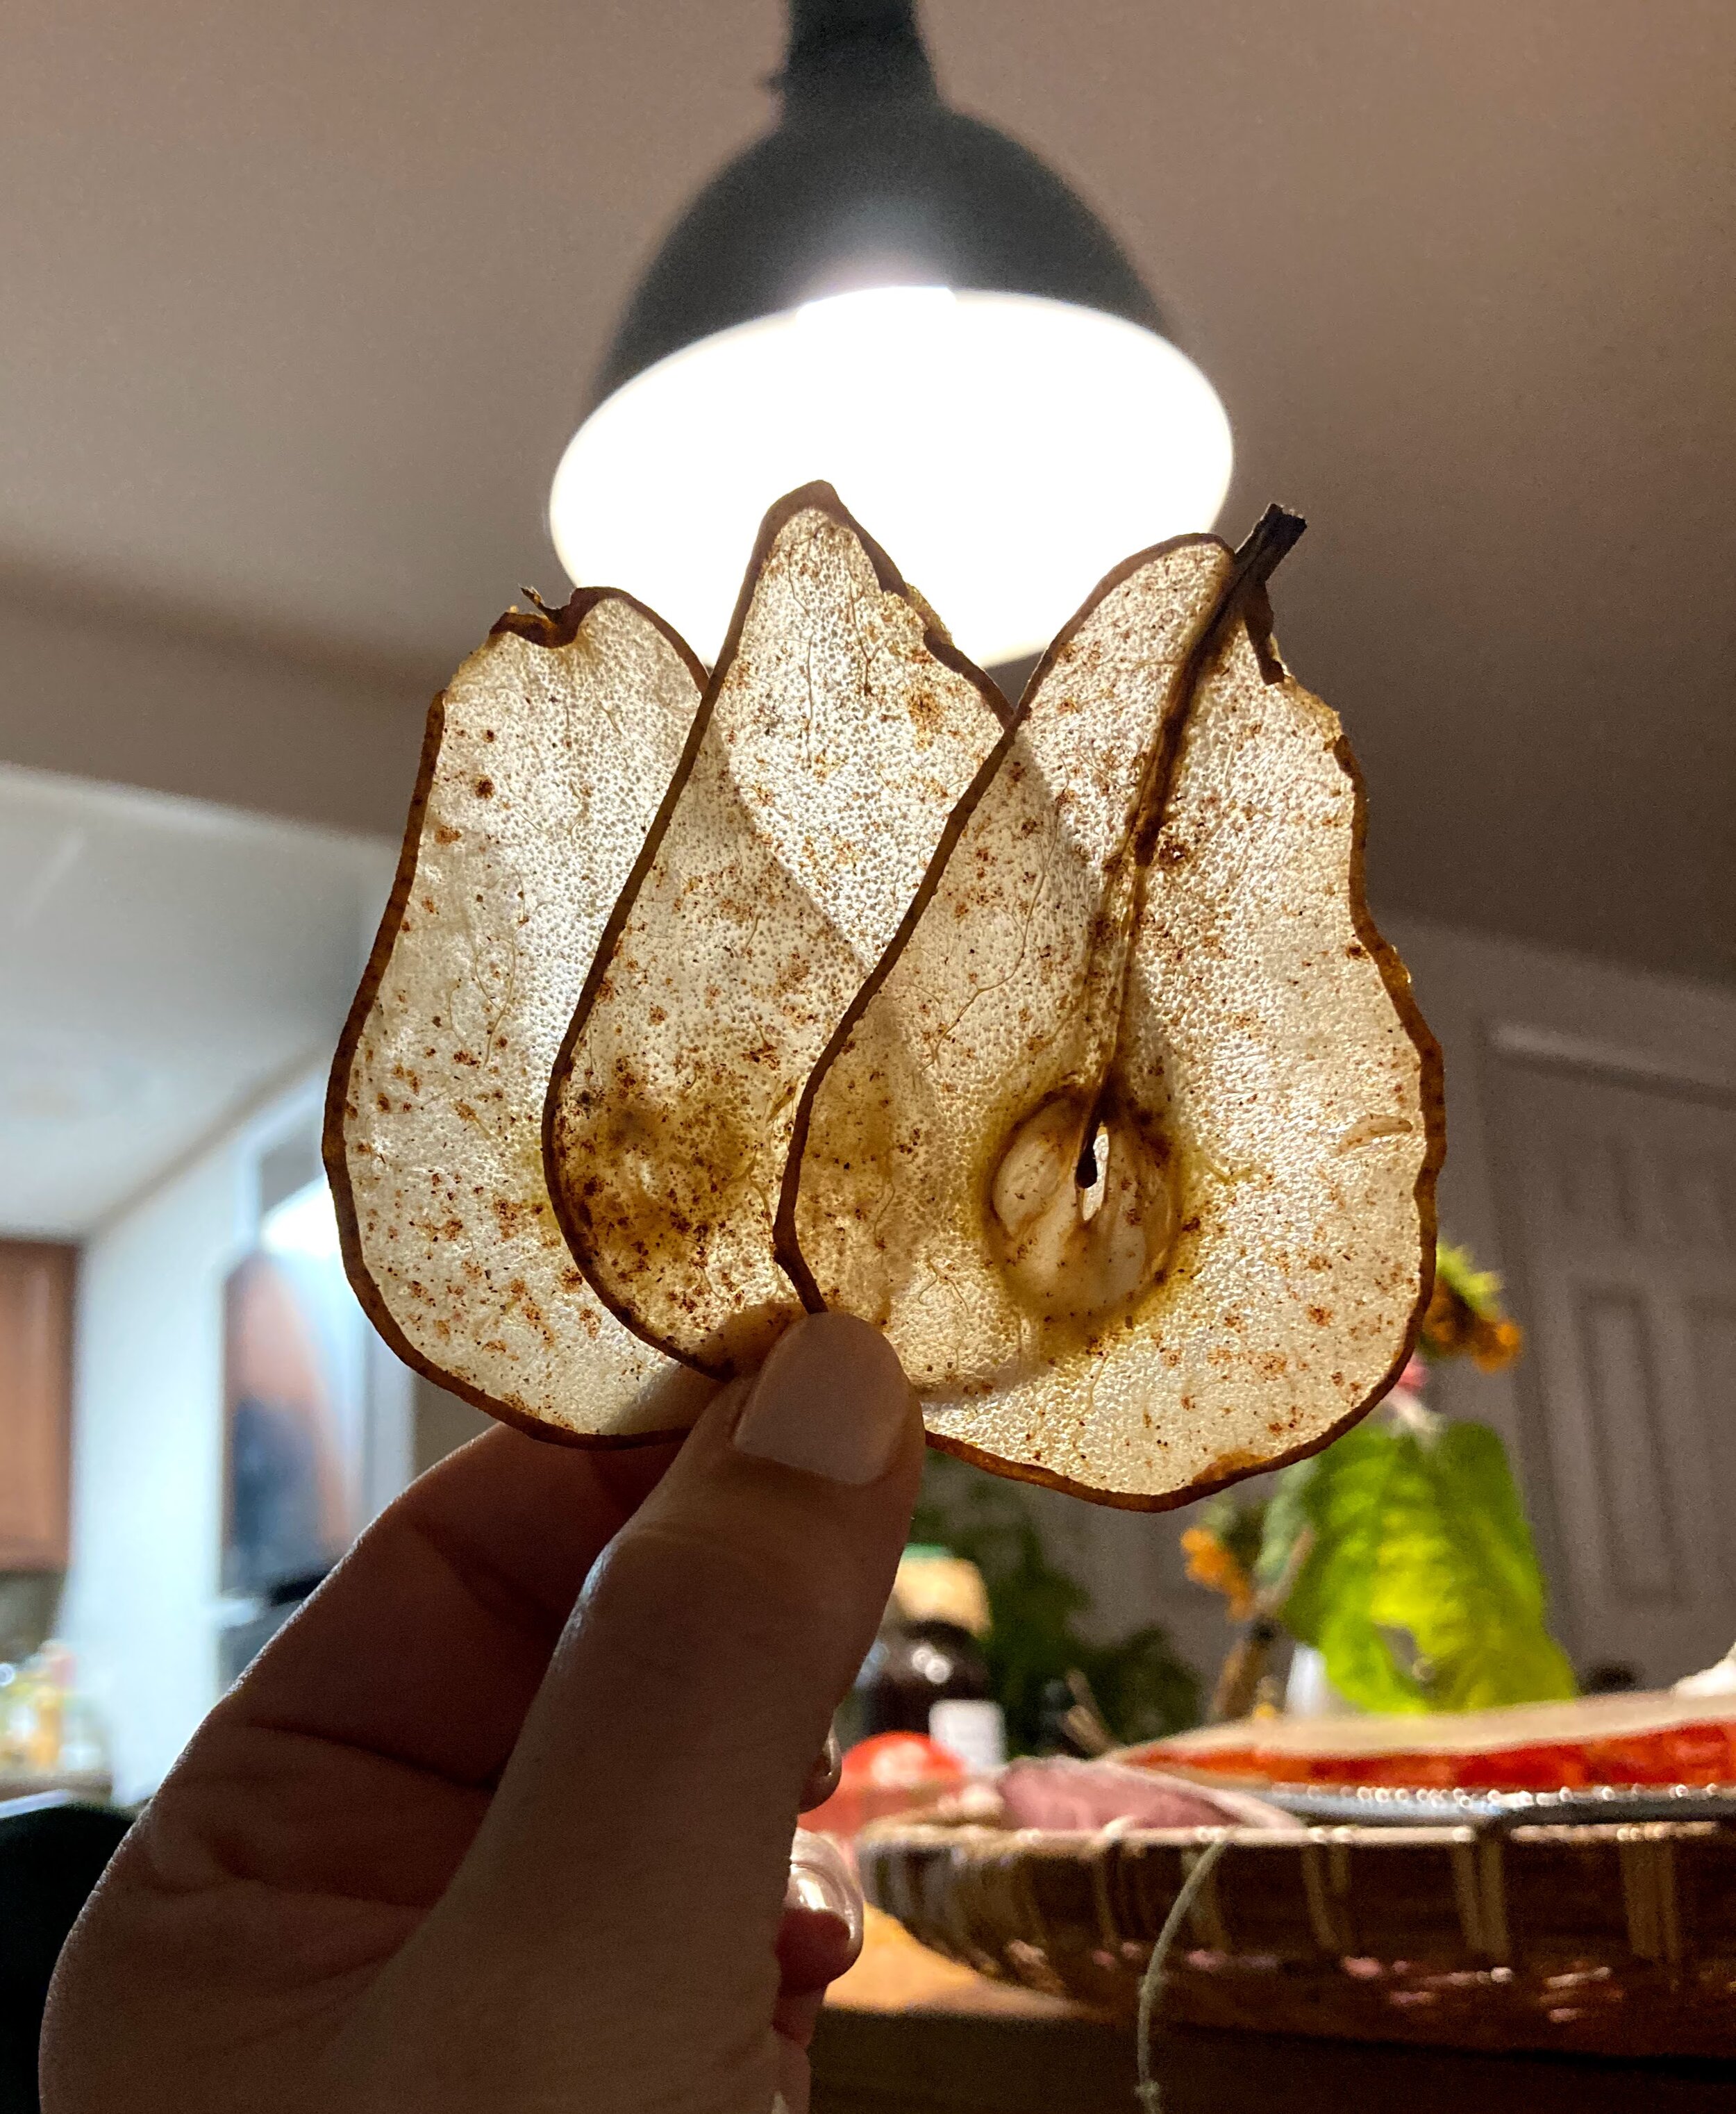 pear slices.jpg